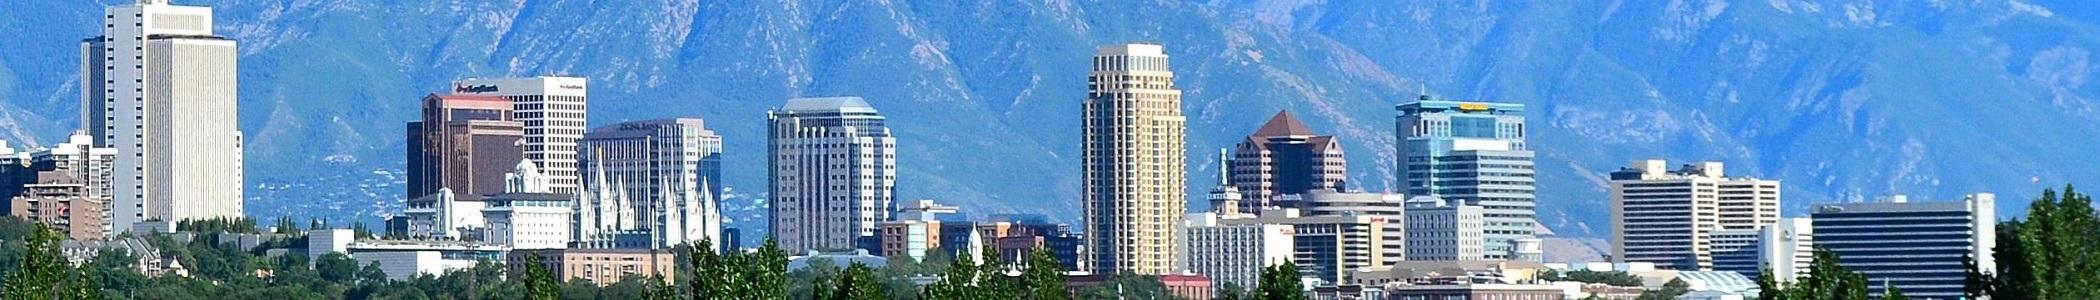 Banner image for Salt Lake City on GigsGuide